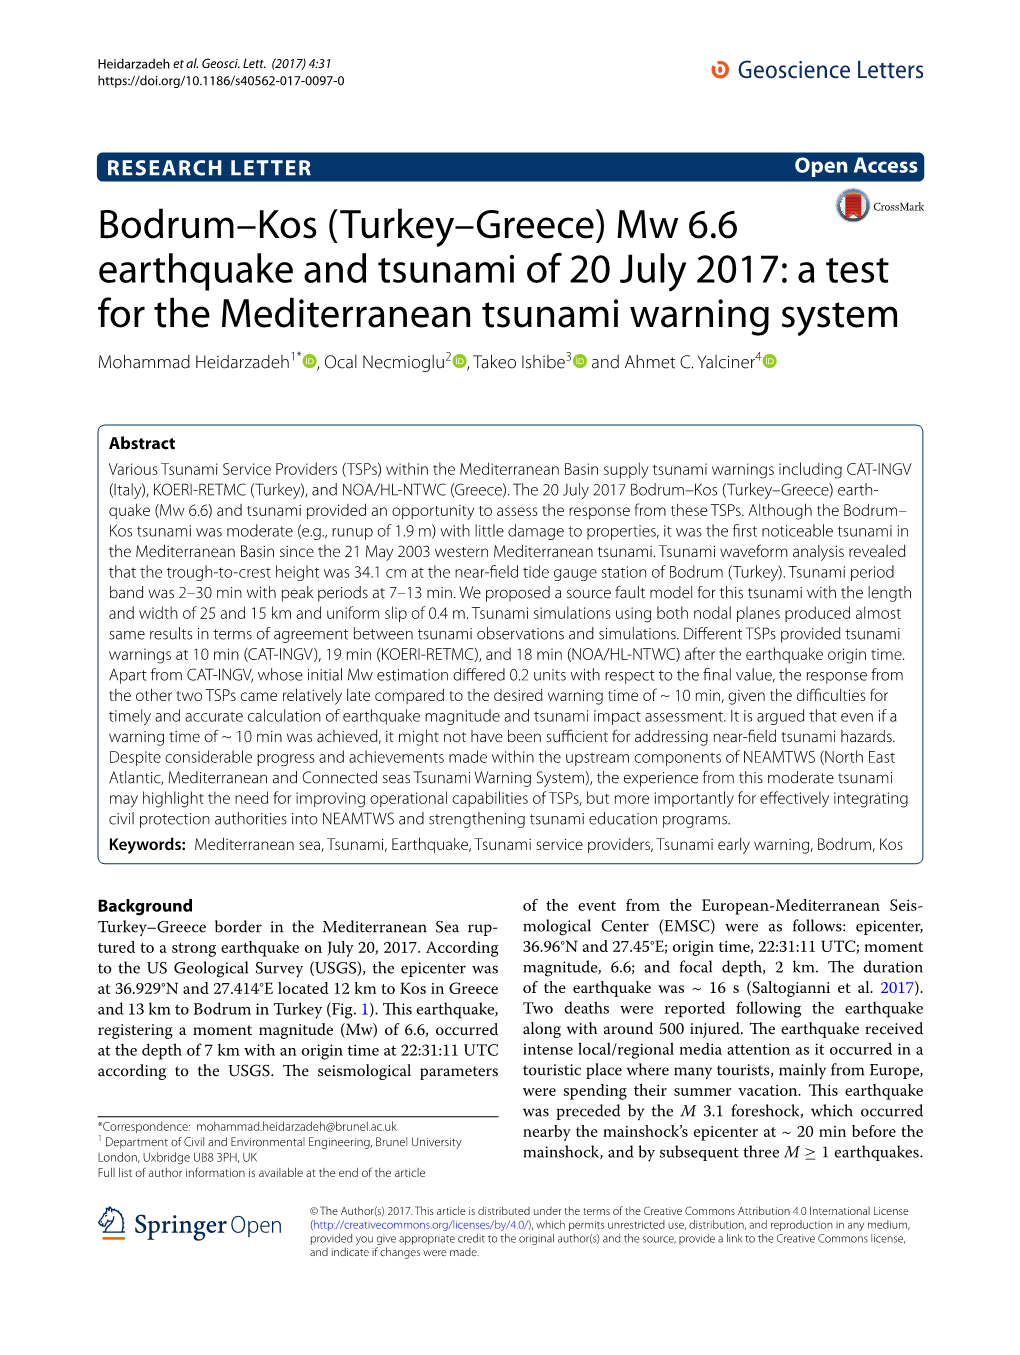 A Test for the Mediterranean Tsunami Warning System Mohammad Heidarzadeh1* , Ocal Necmioglu2 , Takeo Ishibe3 and Ahmet C